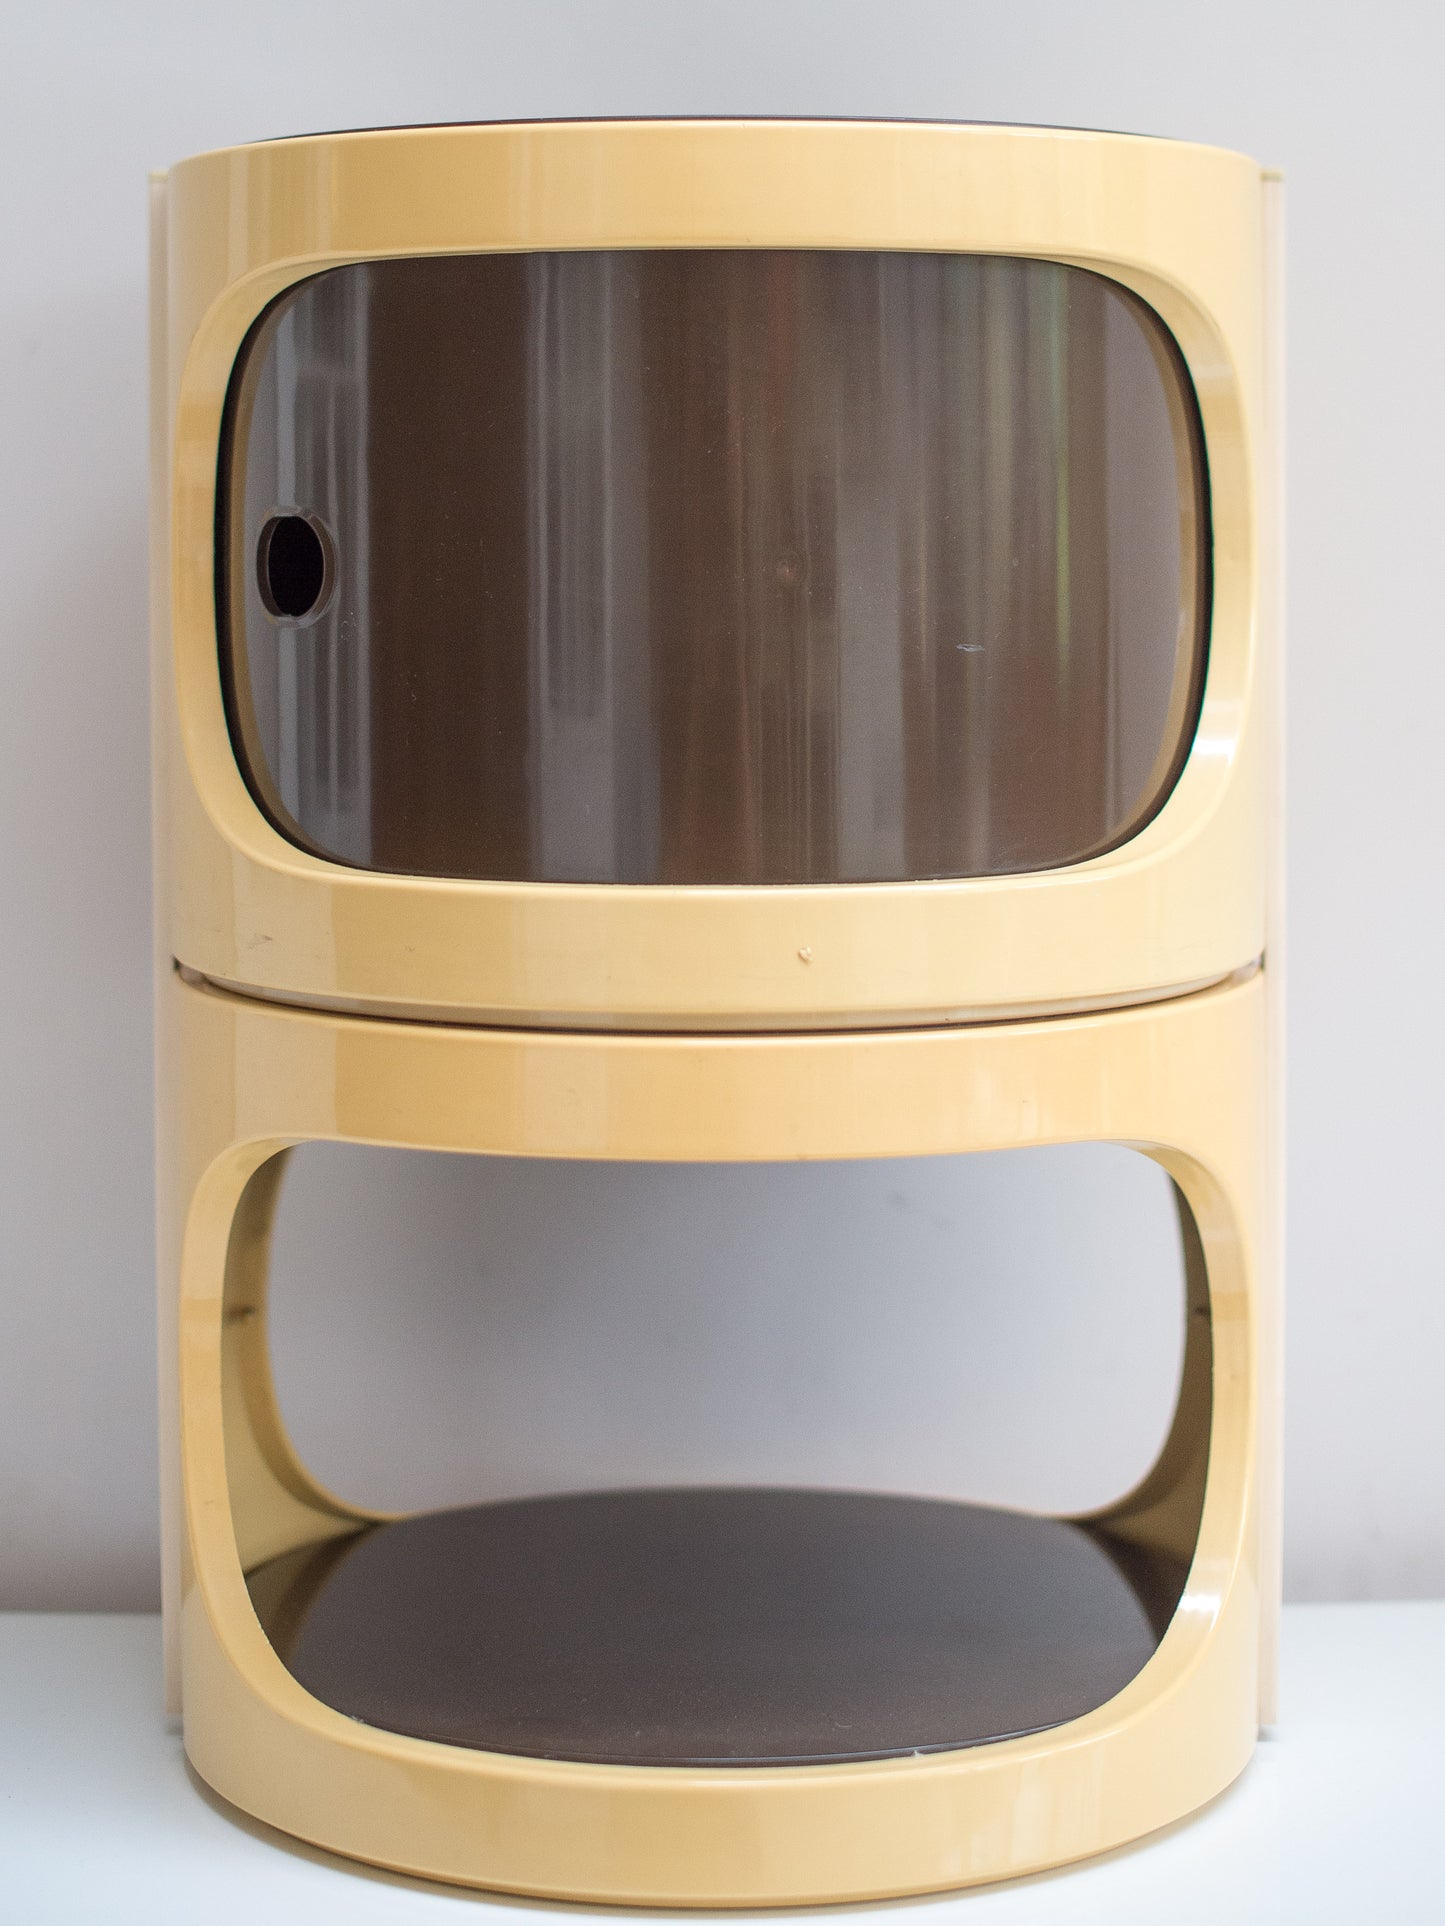 1970s cylindrical table produced by Flair, Holland.